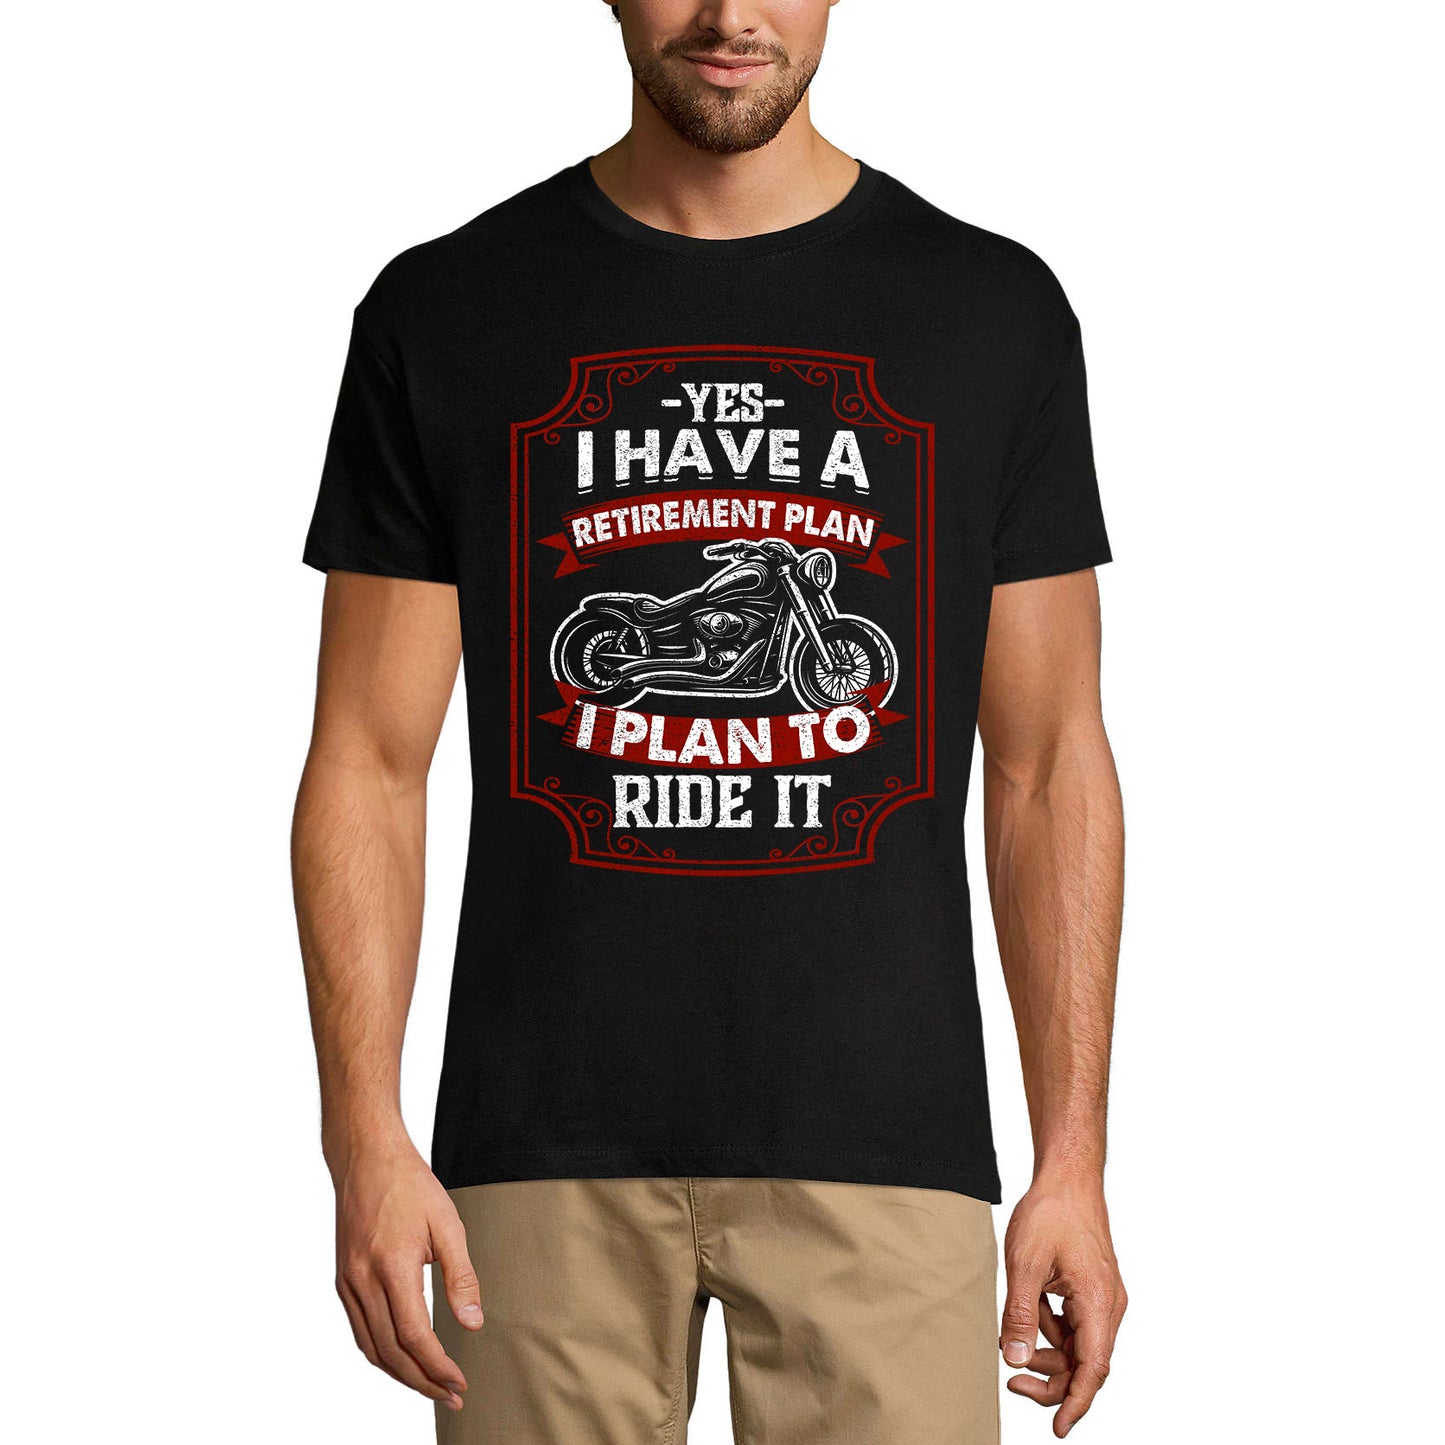 ULTRABASIC Men's Graphic T-Shirt Yes I Have a Retirement Plan - I Plan To Ride It - Biker Tee Shirt